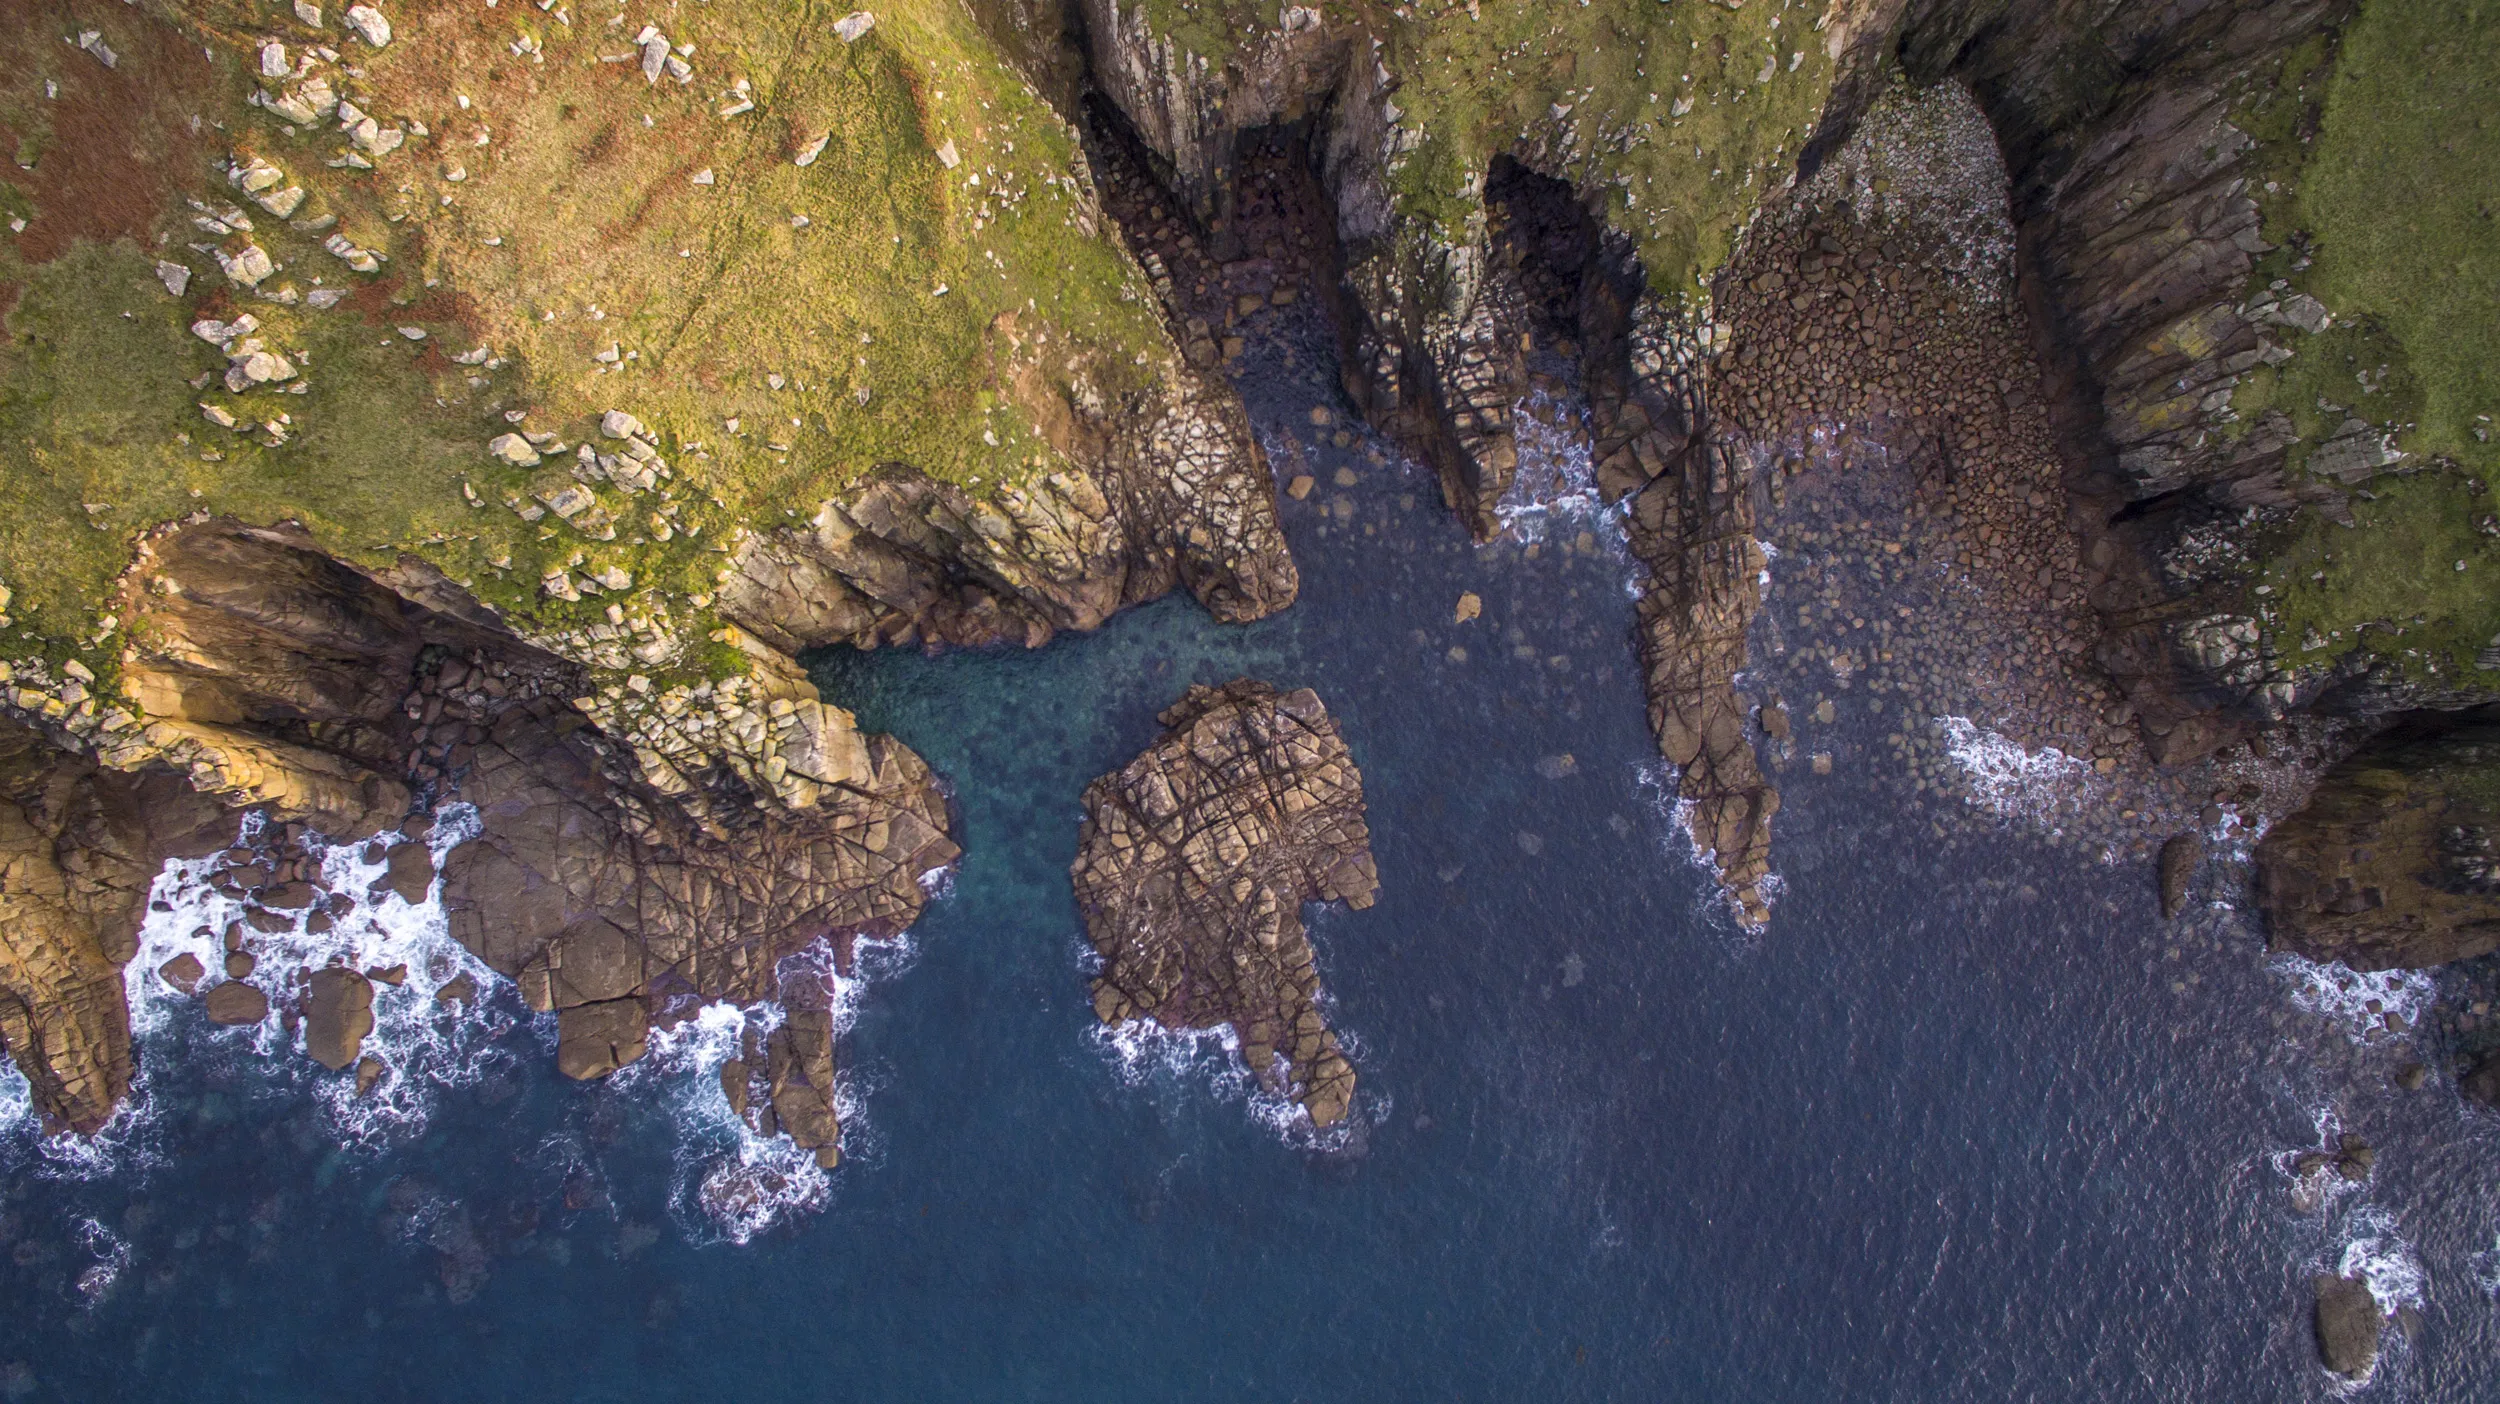 Birds eye view of where costal cliffs meet the sea.